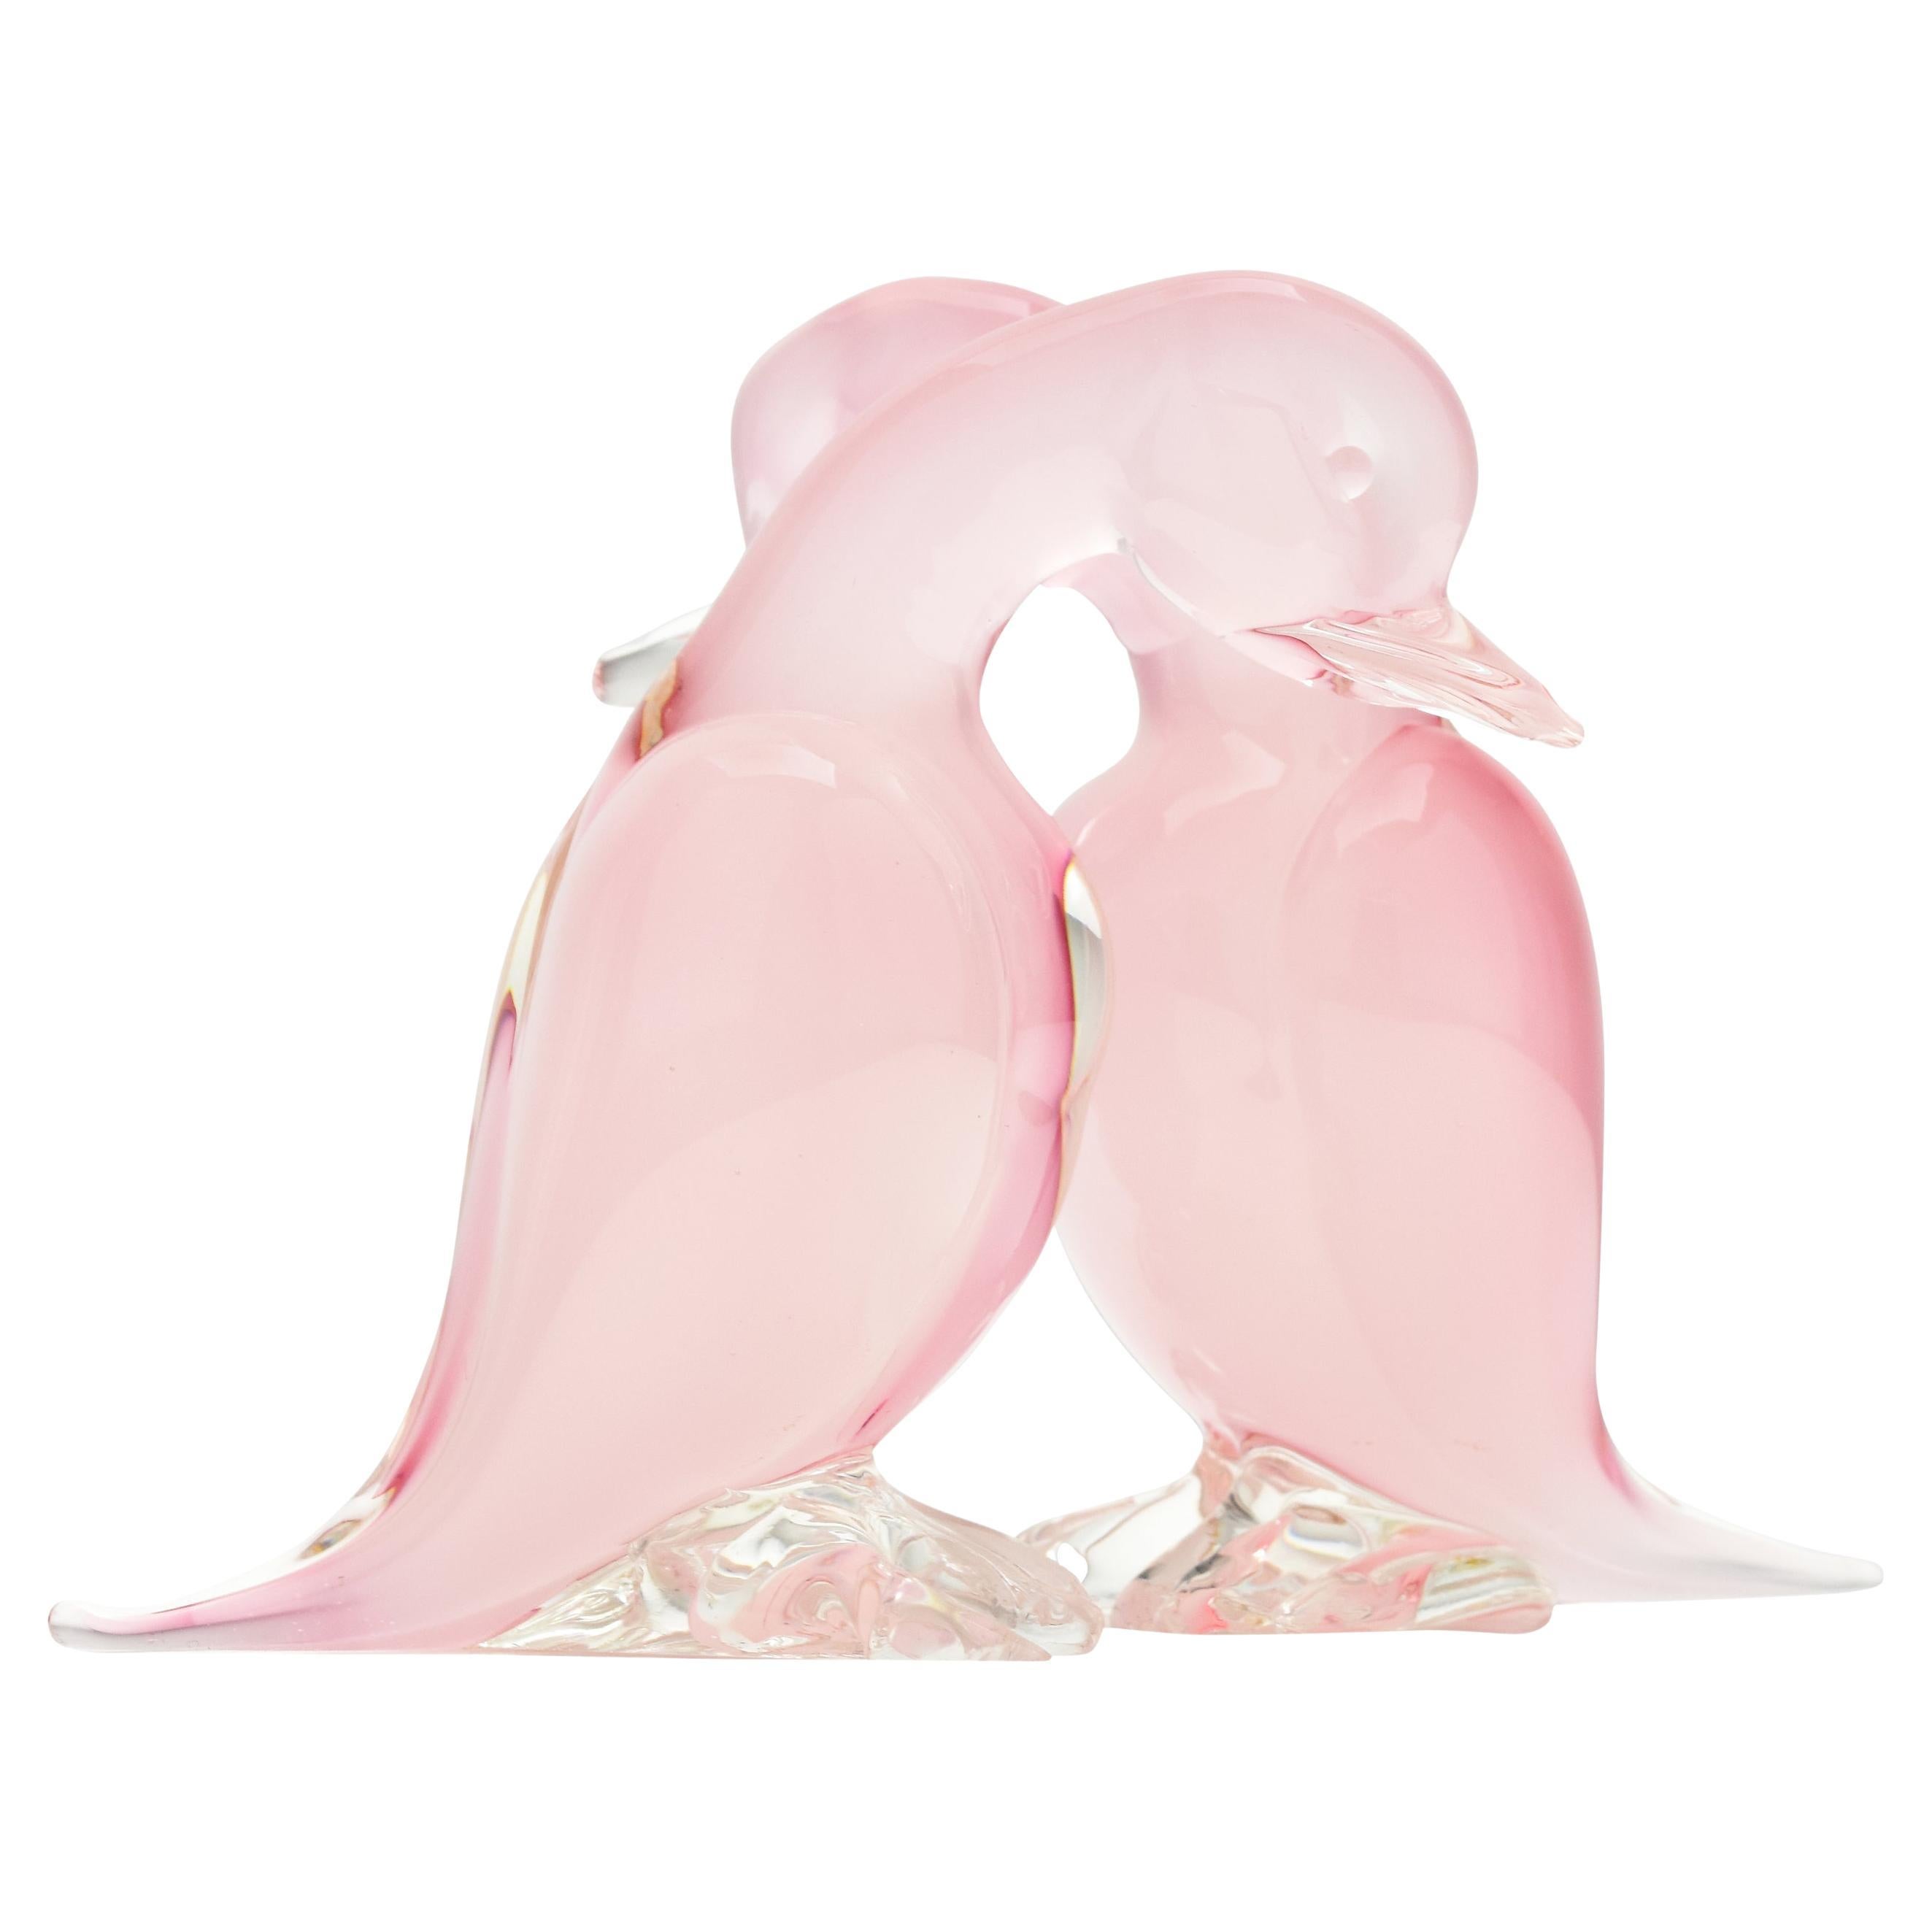 Seguso Duck Loving Couple Figurines rose albâtre Murano Studio Art Glass